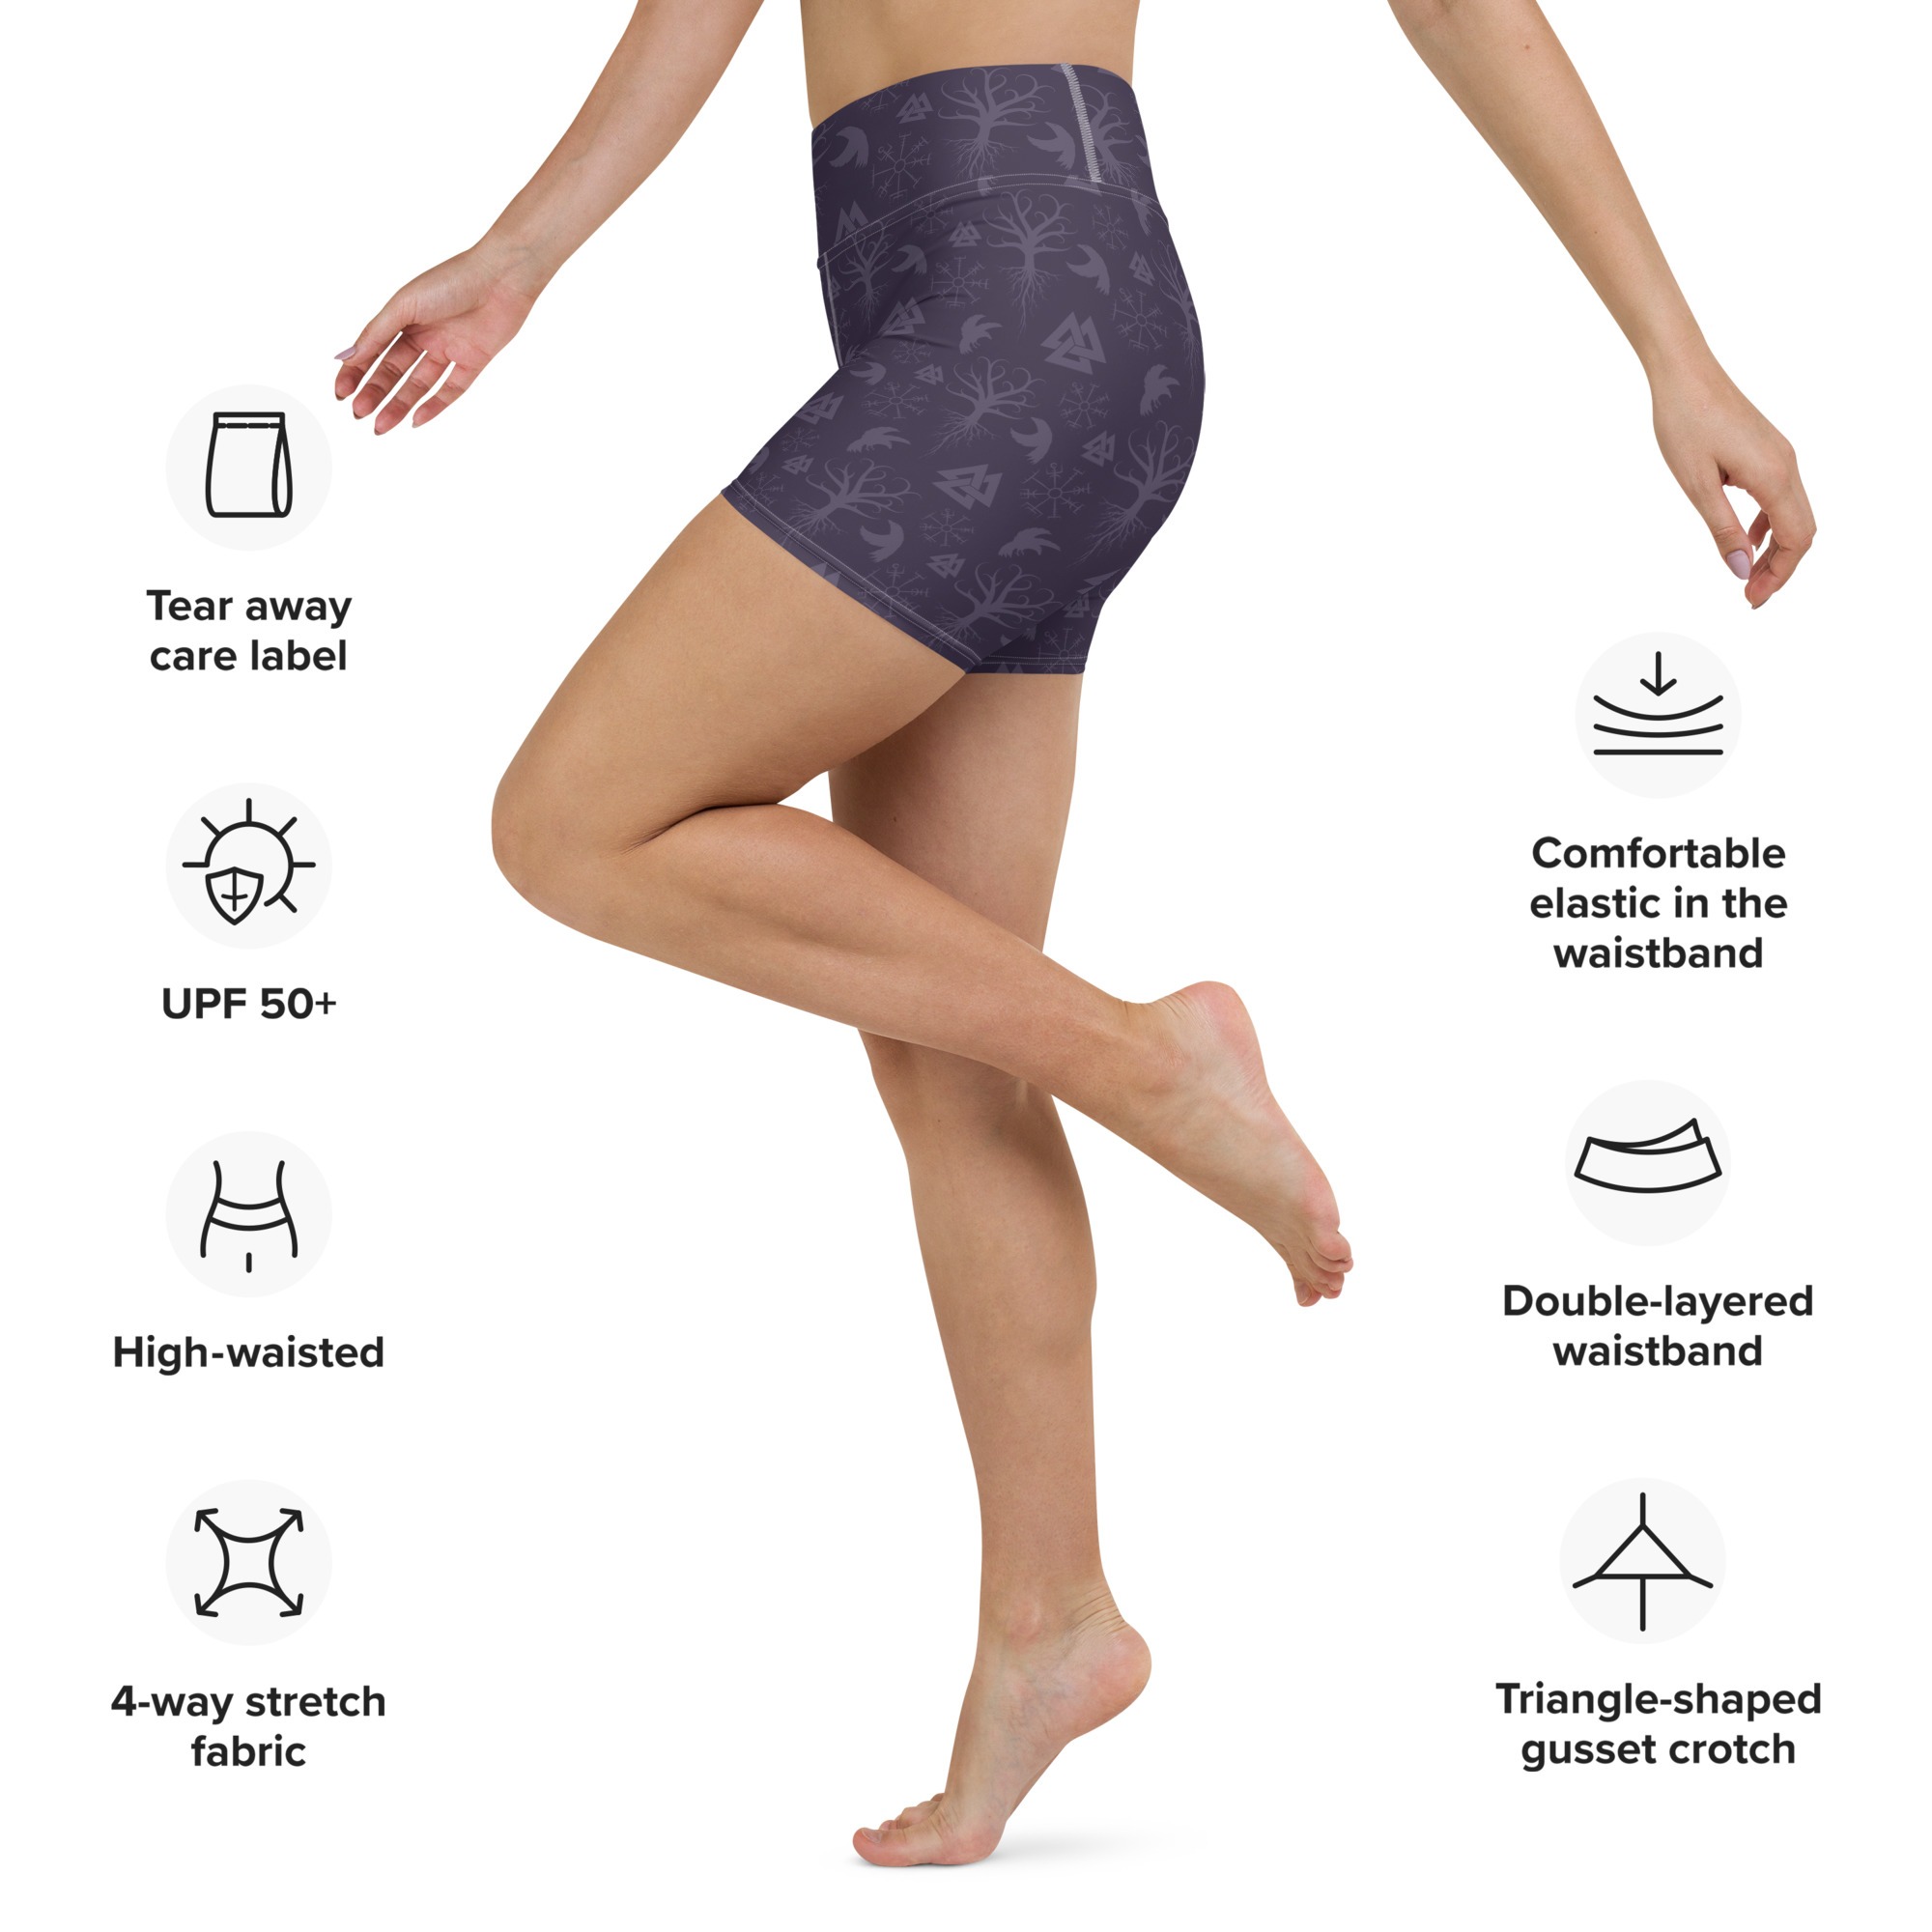 Purple Norse Symbols Yoga Shorts